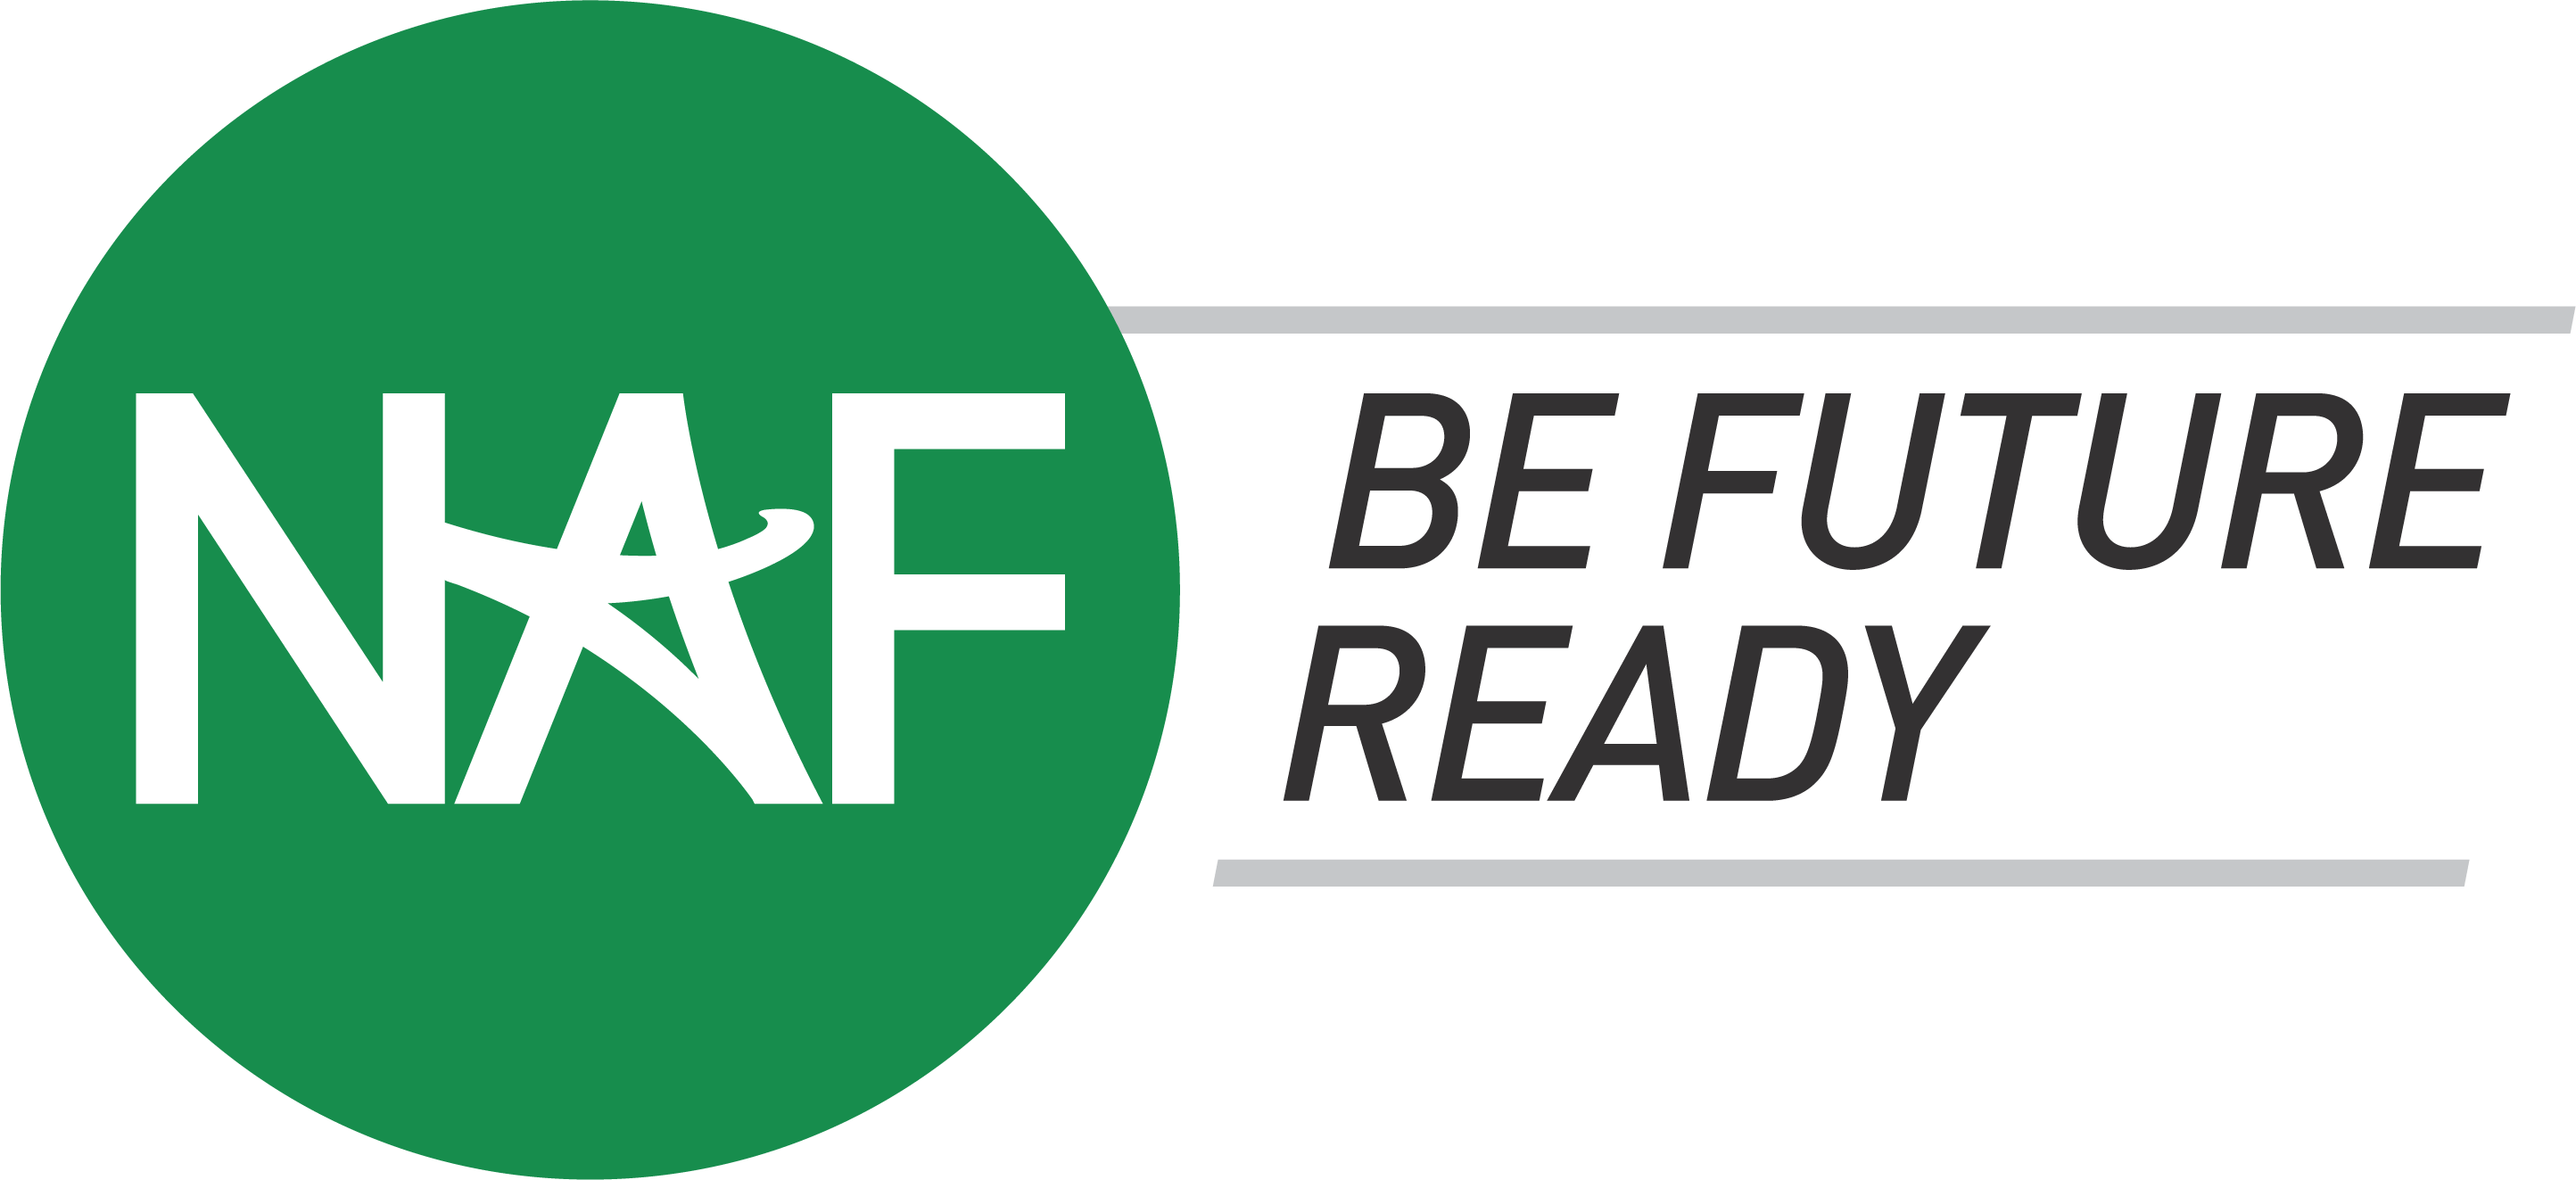 NAF: Be Future Ready